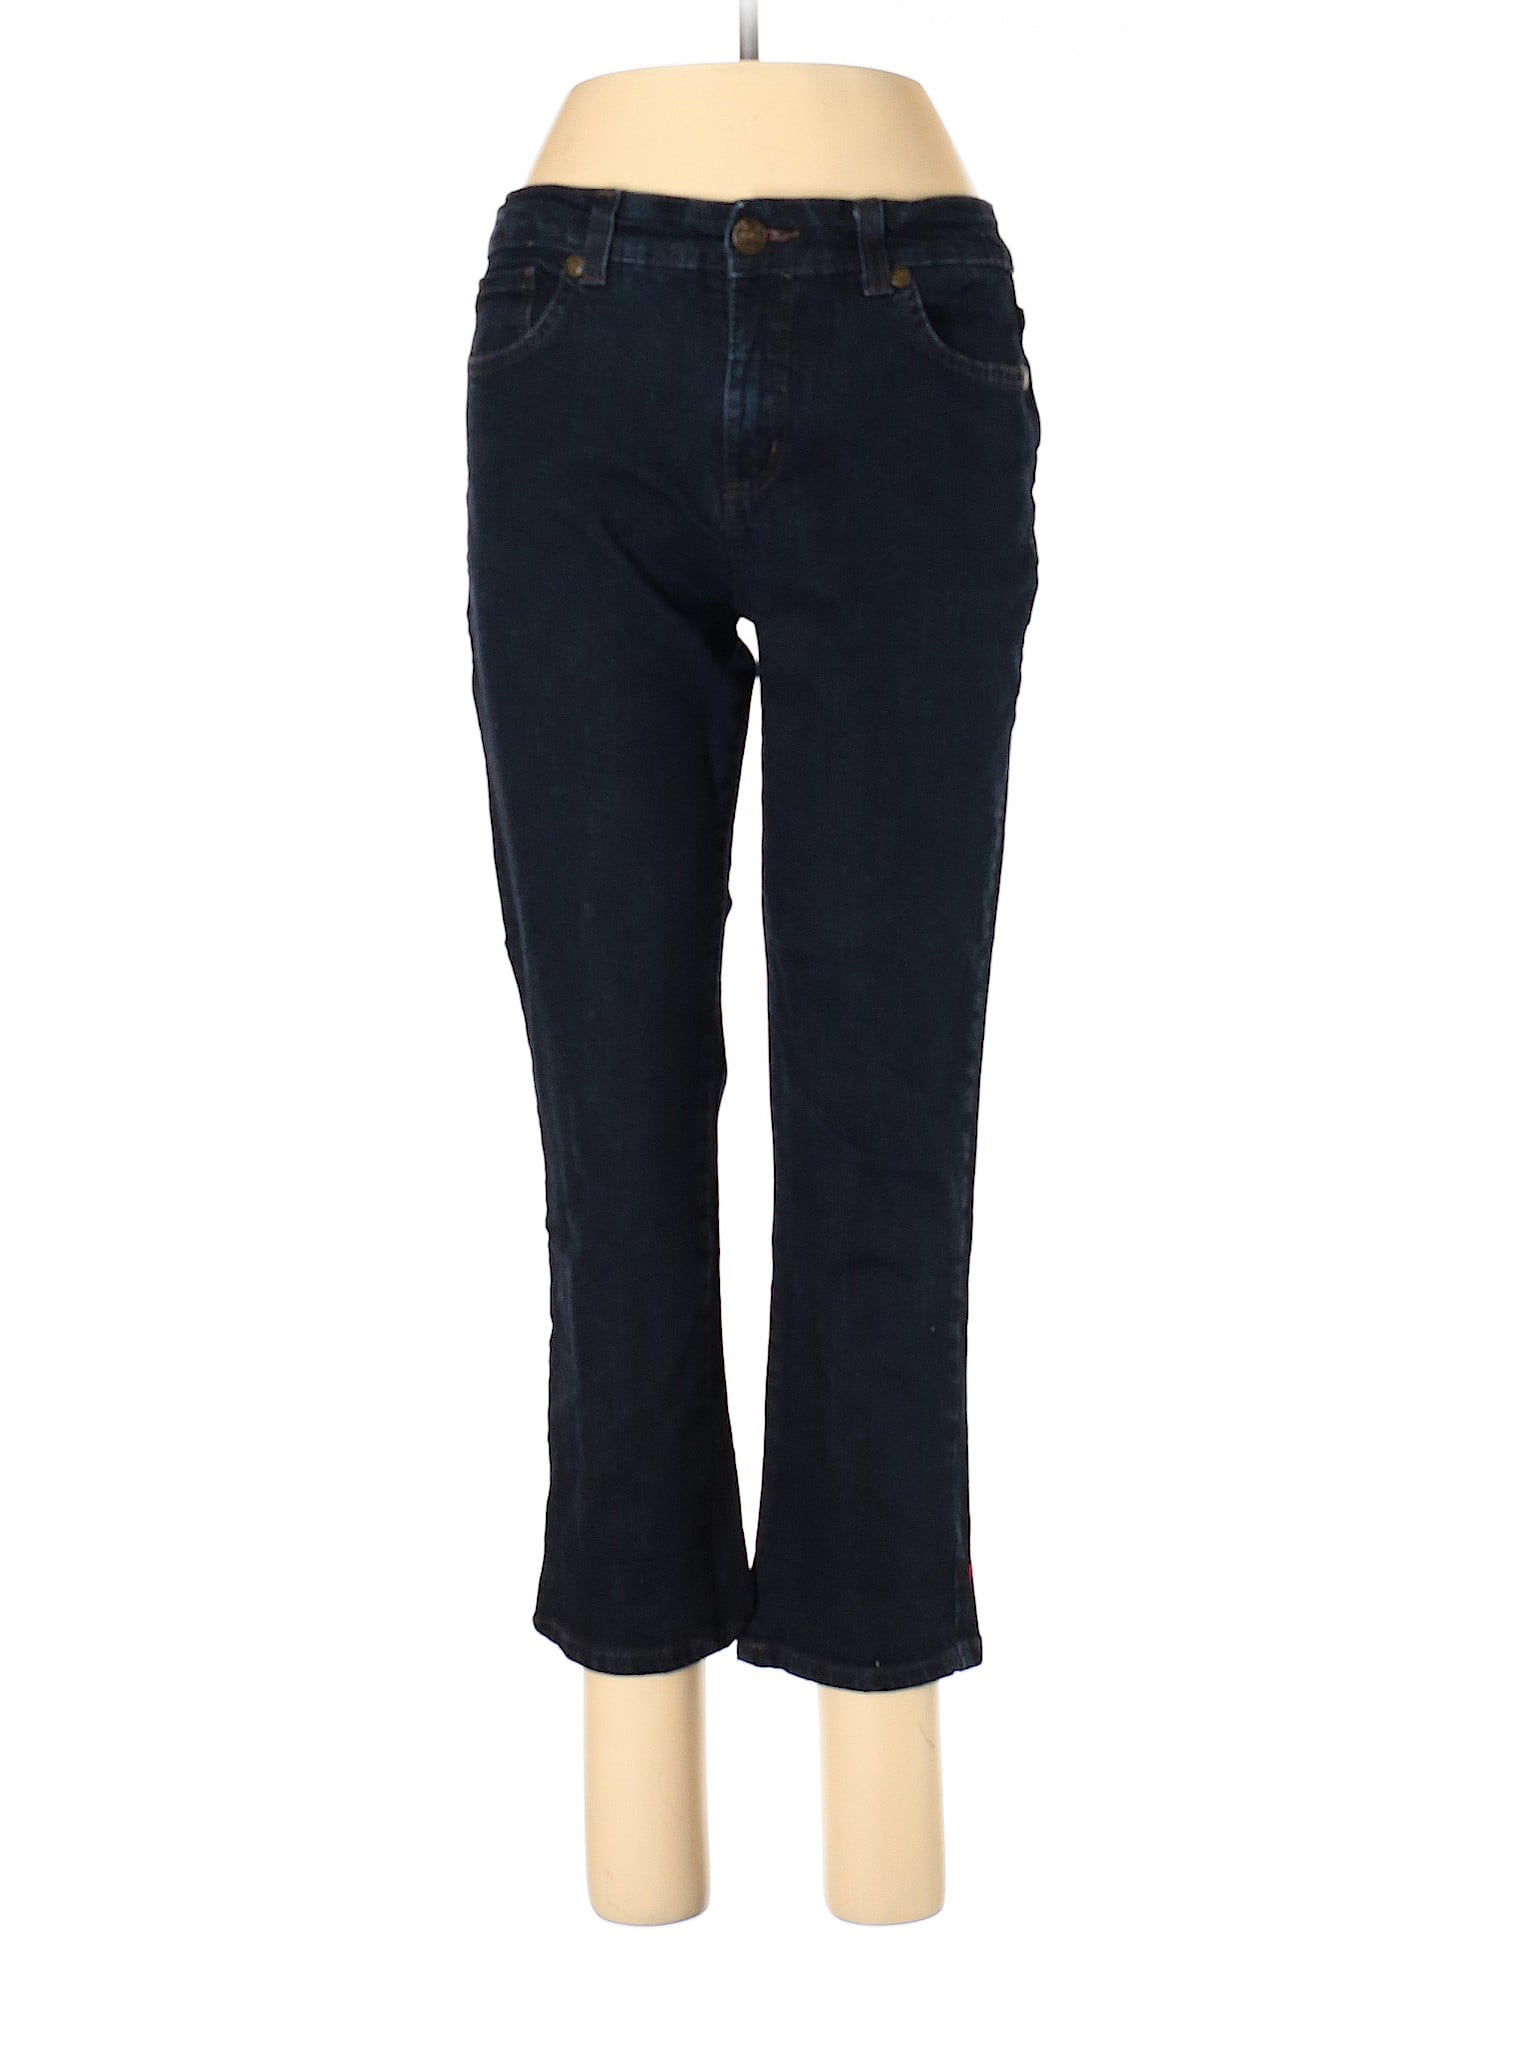 Nine West - Pre-Owned Nine West Vintage America Women's Size 10 Jeans ...